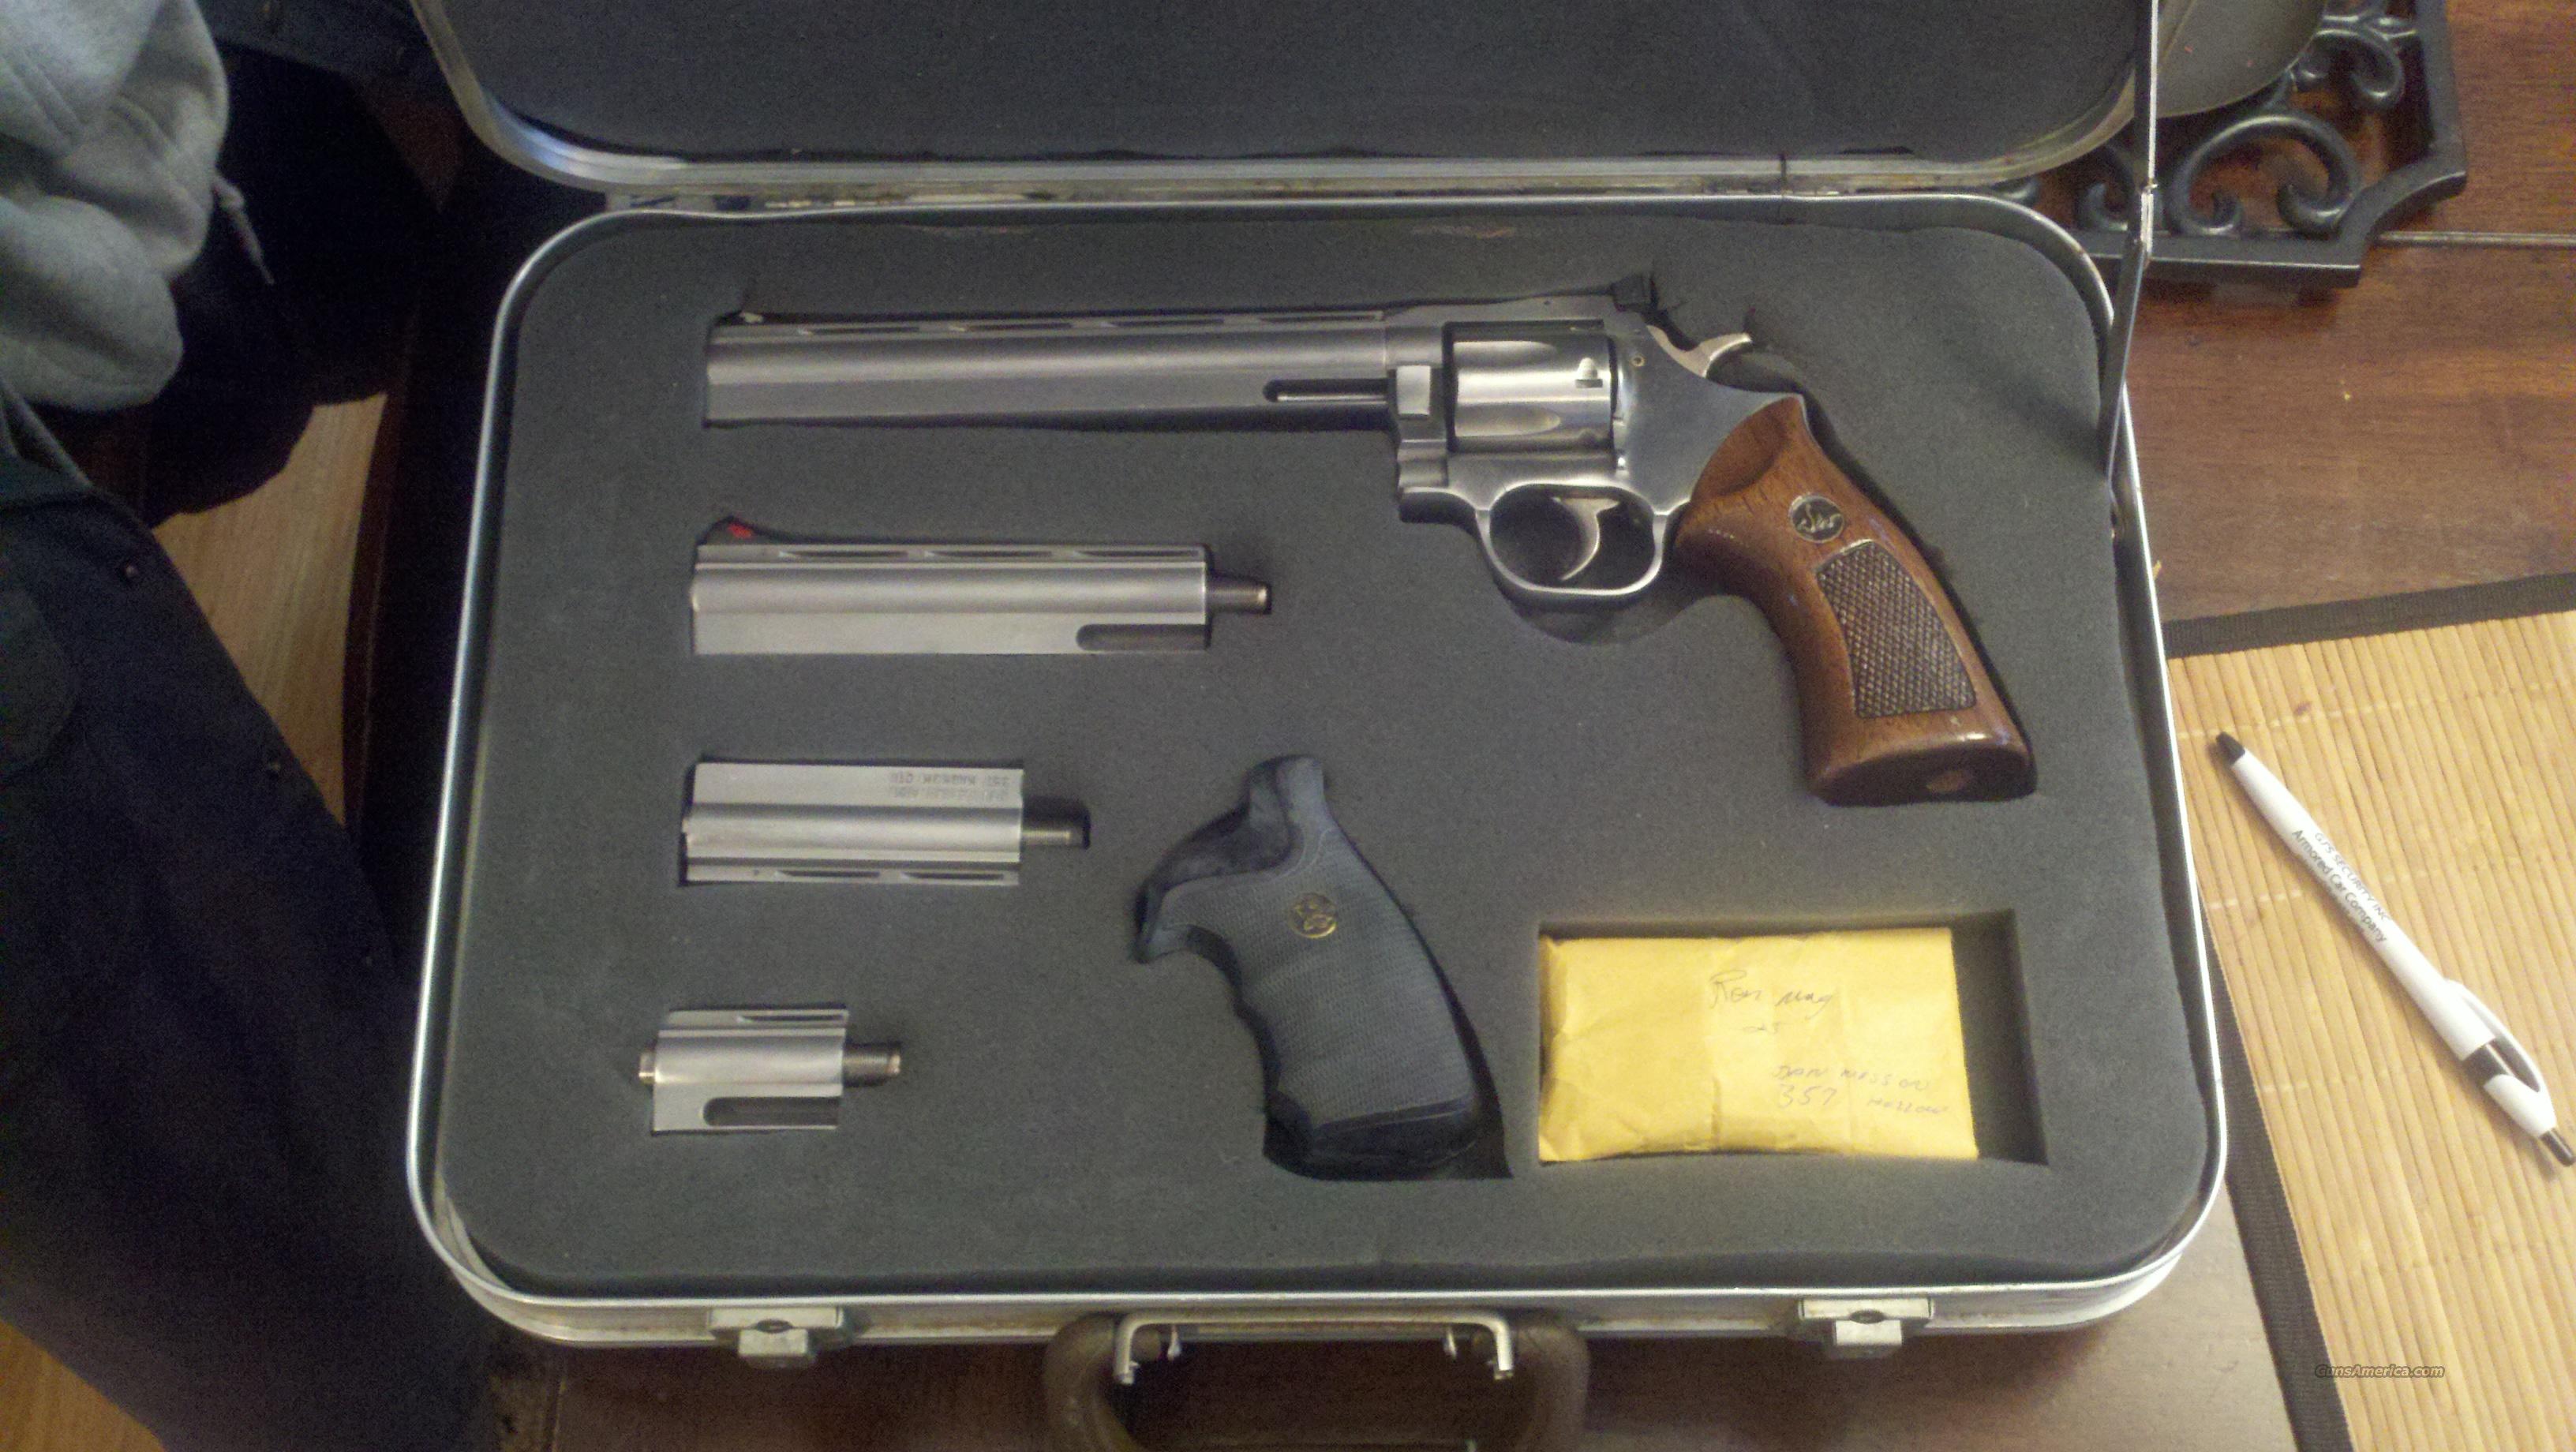 Dan Wesson 357 Magnum Revolver Backgrounds on Wallpapers Vista